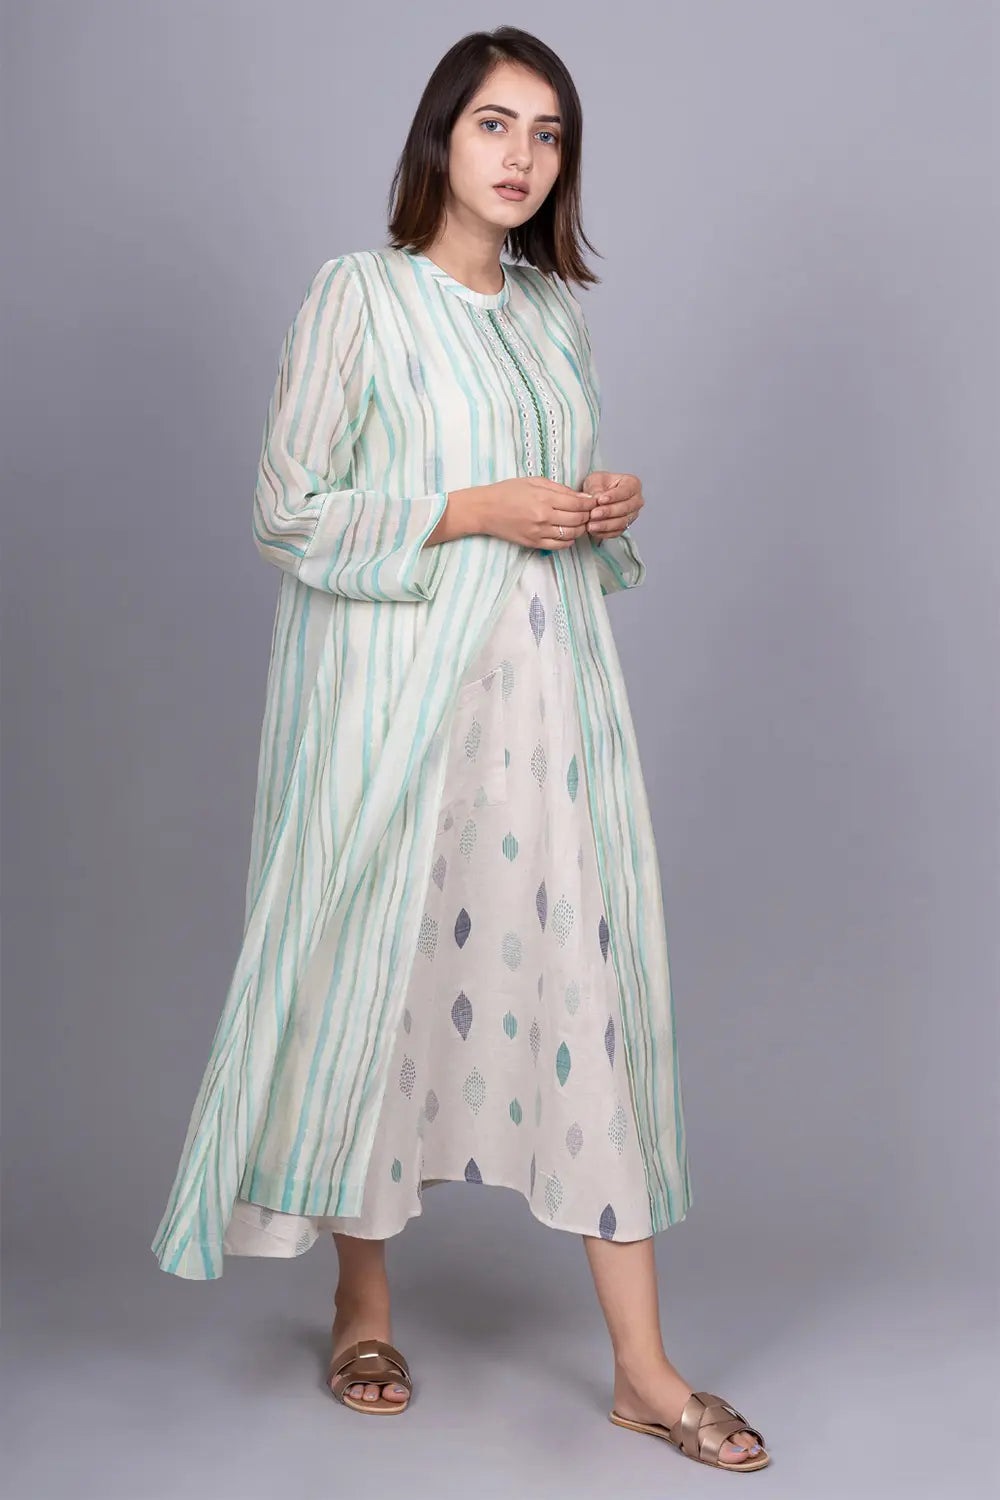 Chanderi silk mirror work Dress with block printed inner dress